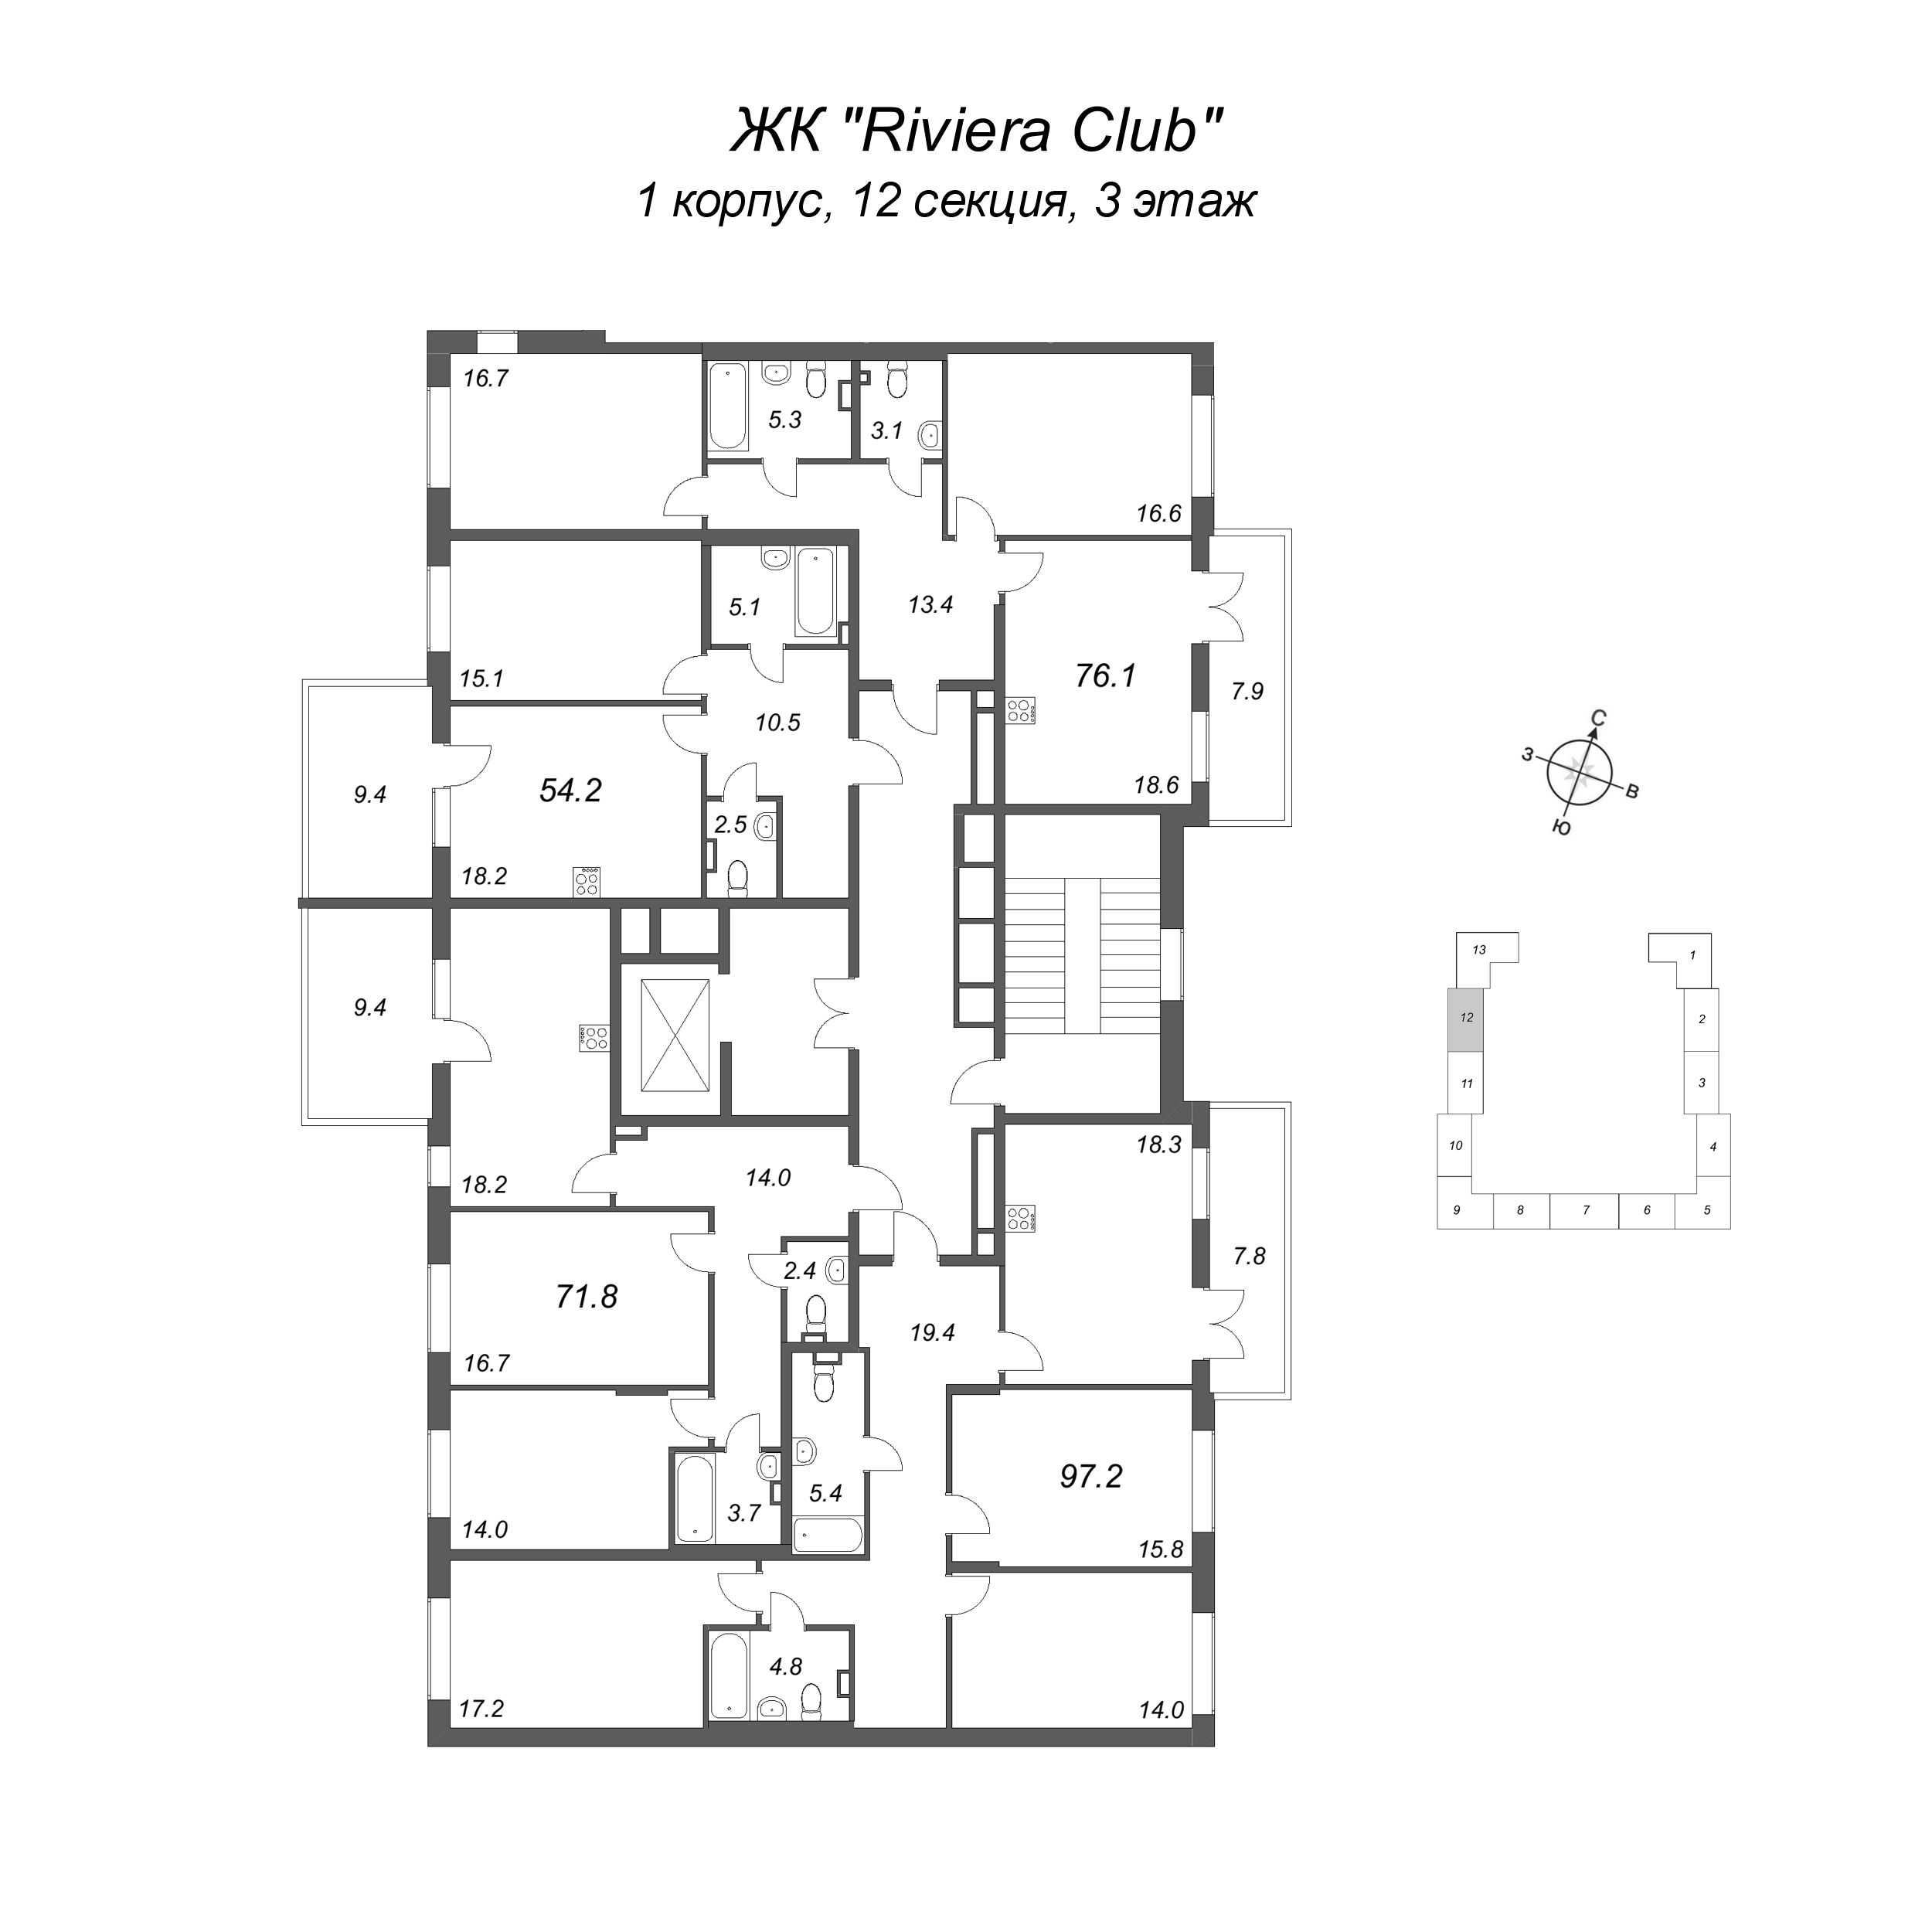 3-комнатная (Евро) квартира, 71.8 м² в ЖК "Riviera Club" - планировка этажа